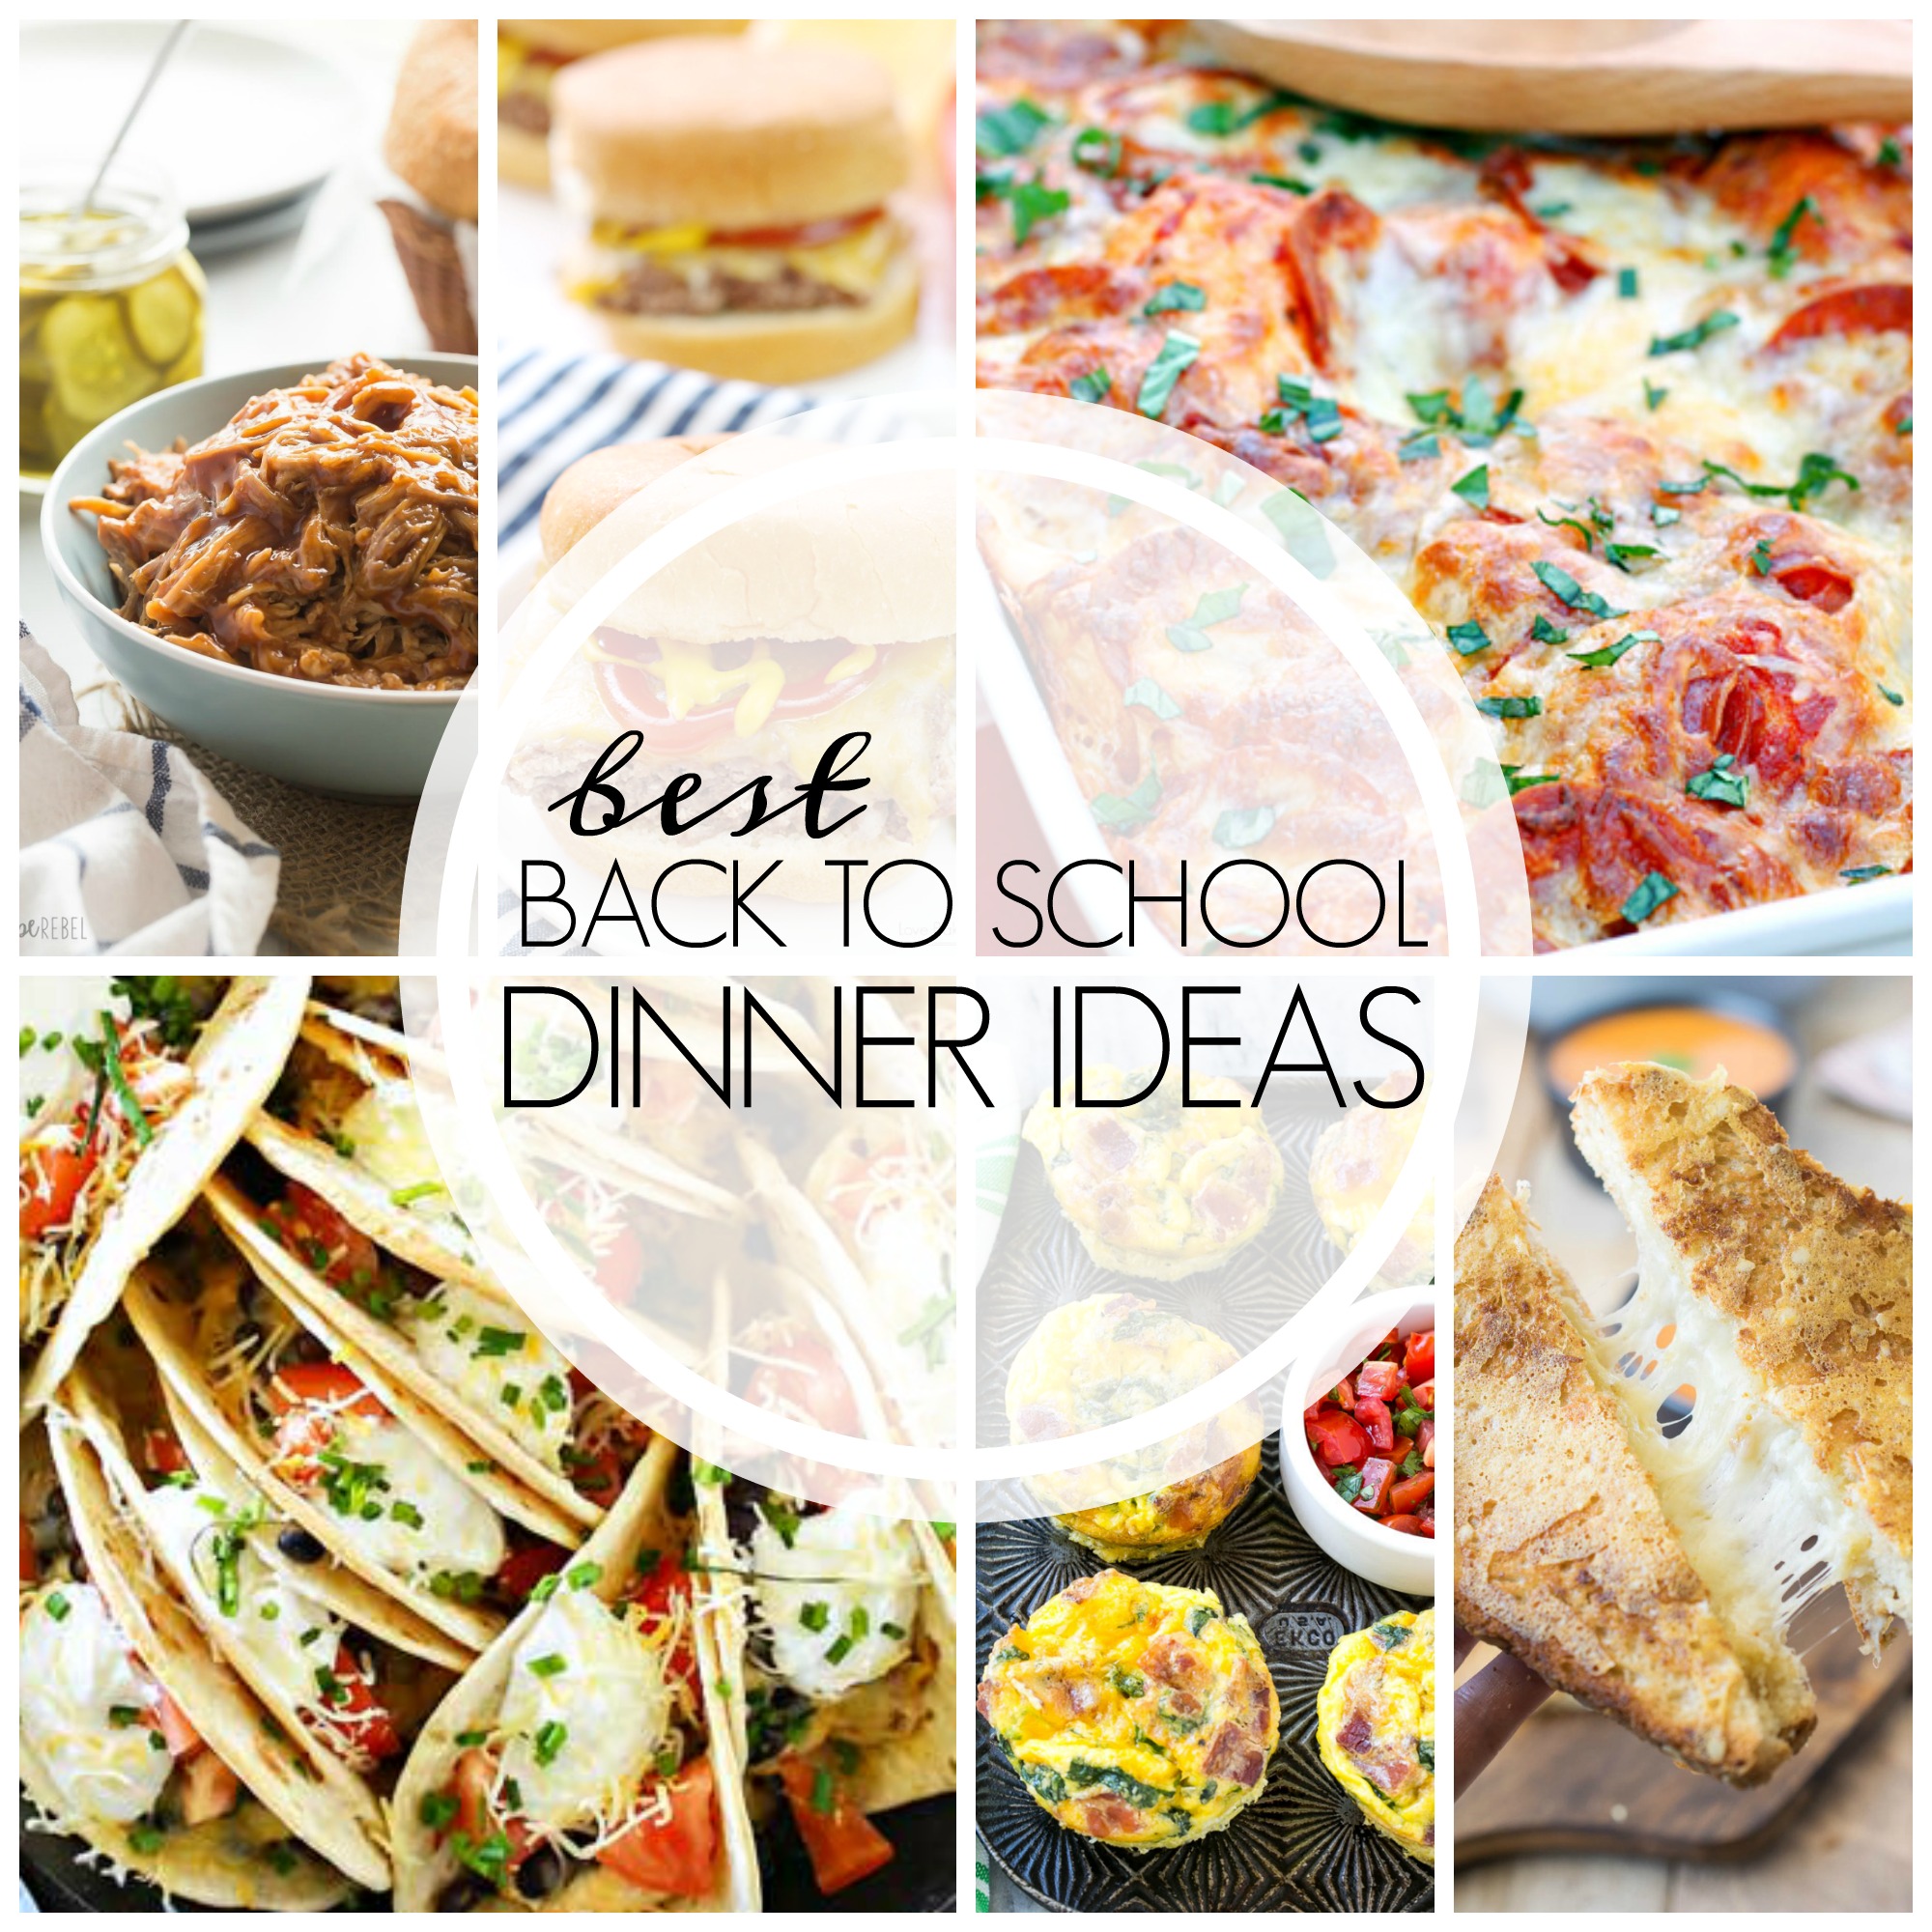 The Best Back to School Dinner Ideas